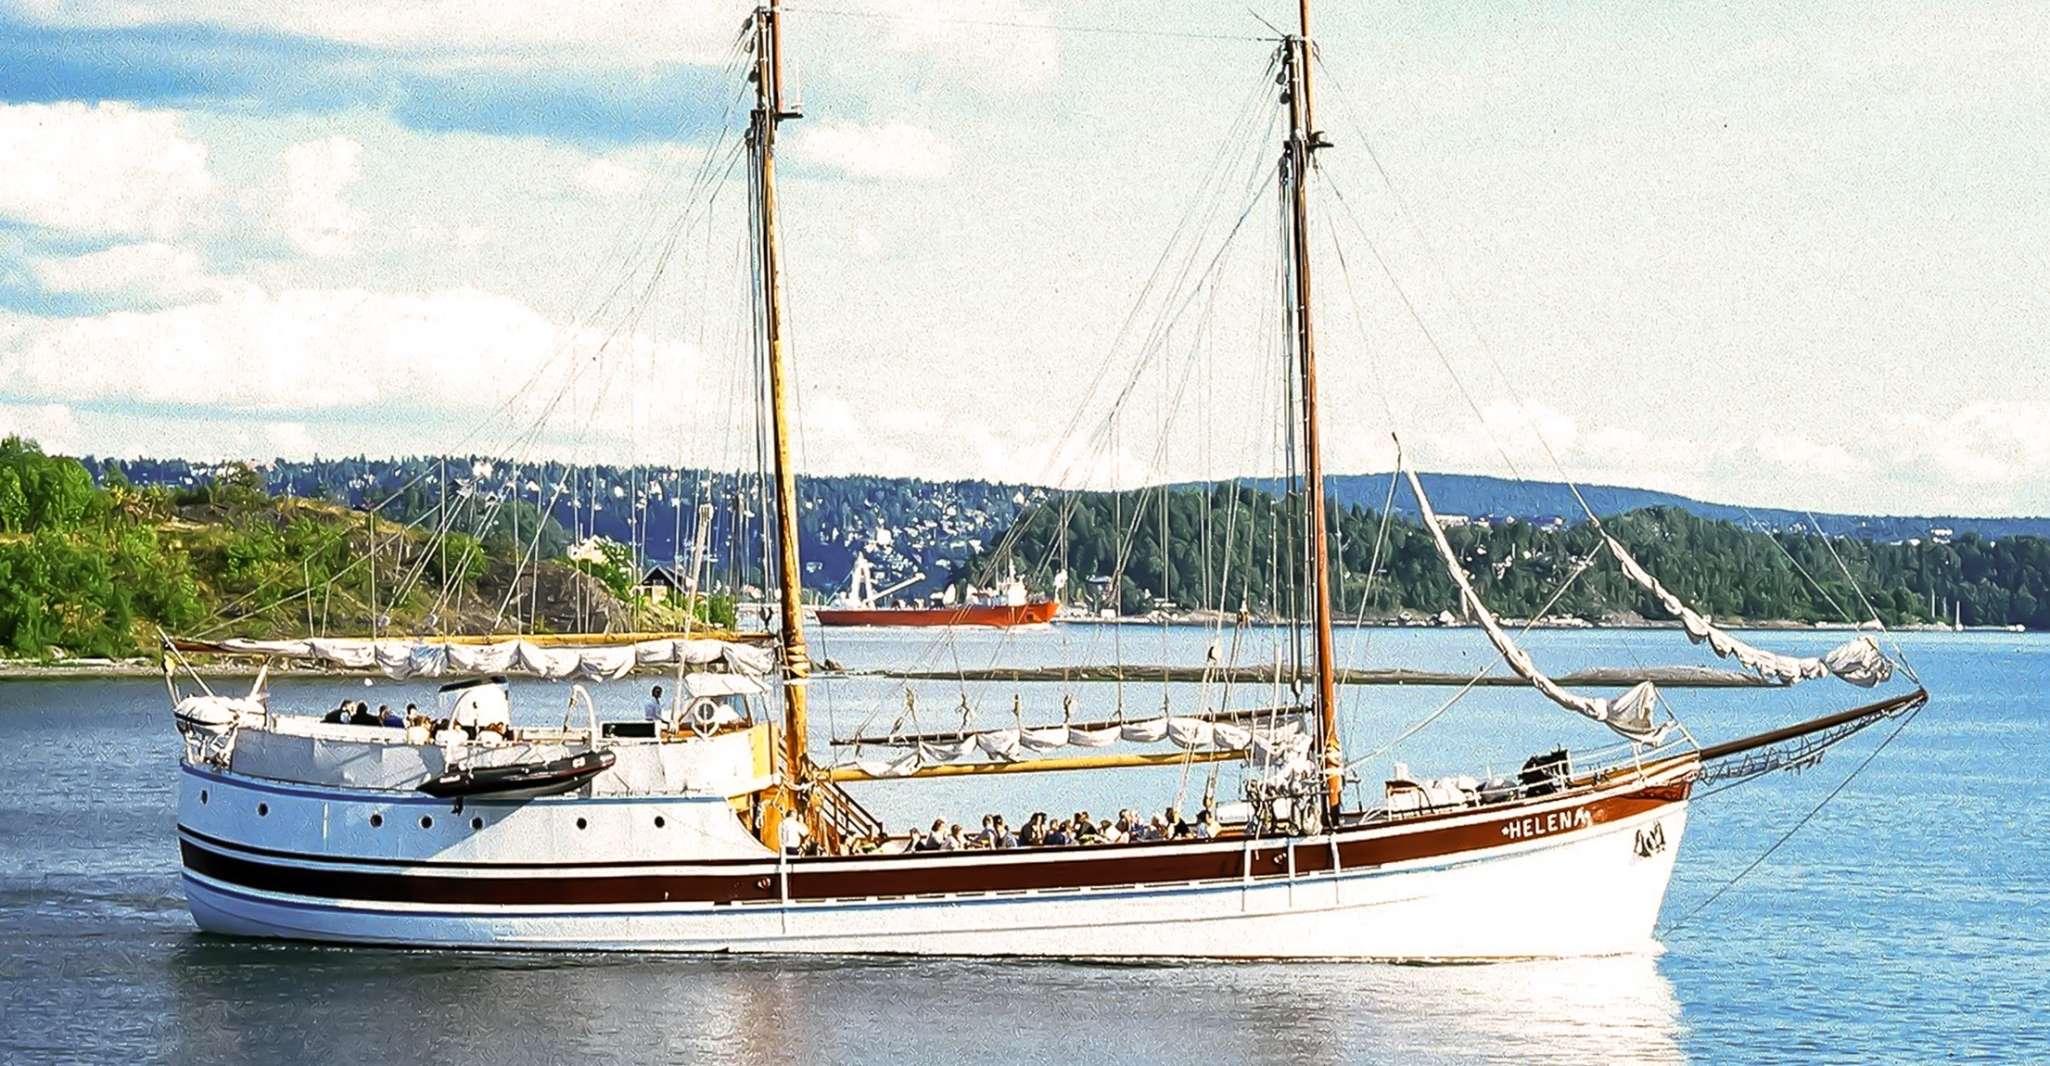 Oslo, Oslo Fjord Sightseeing Cruise by Sailing Ship - Housity